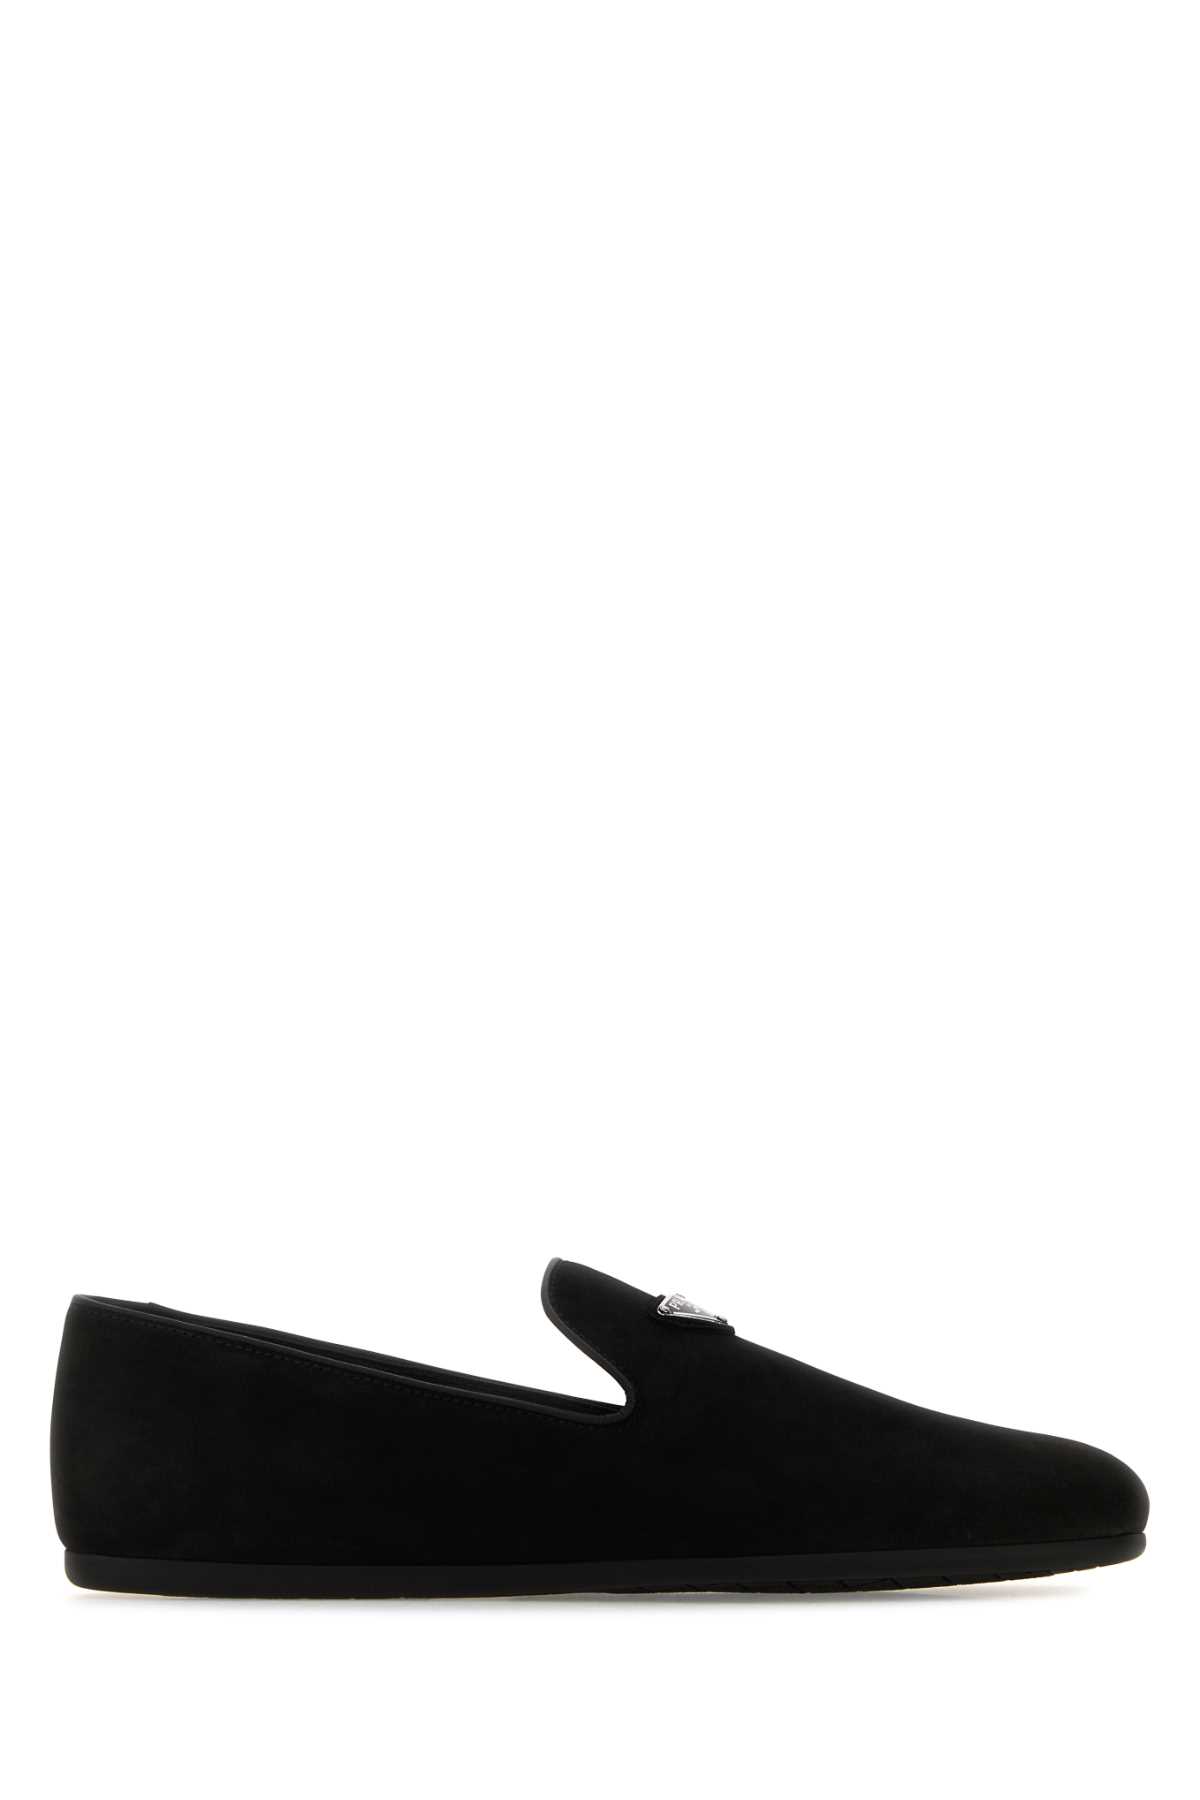 Prada Black Suede Loafers In Nero